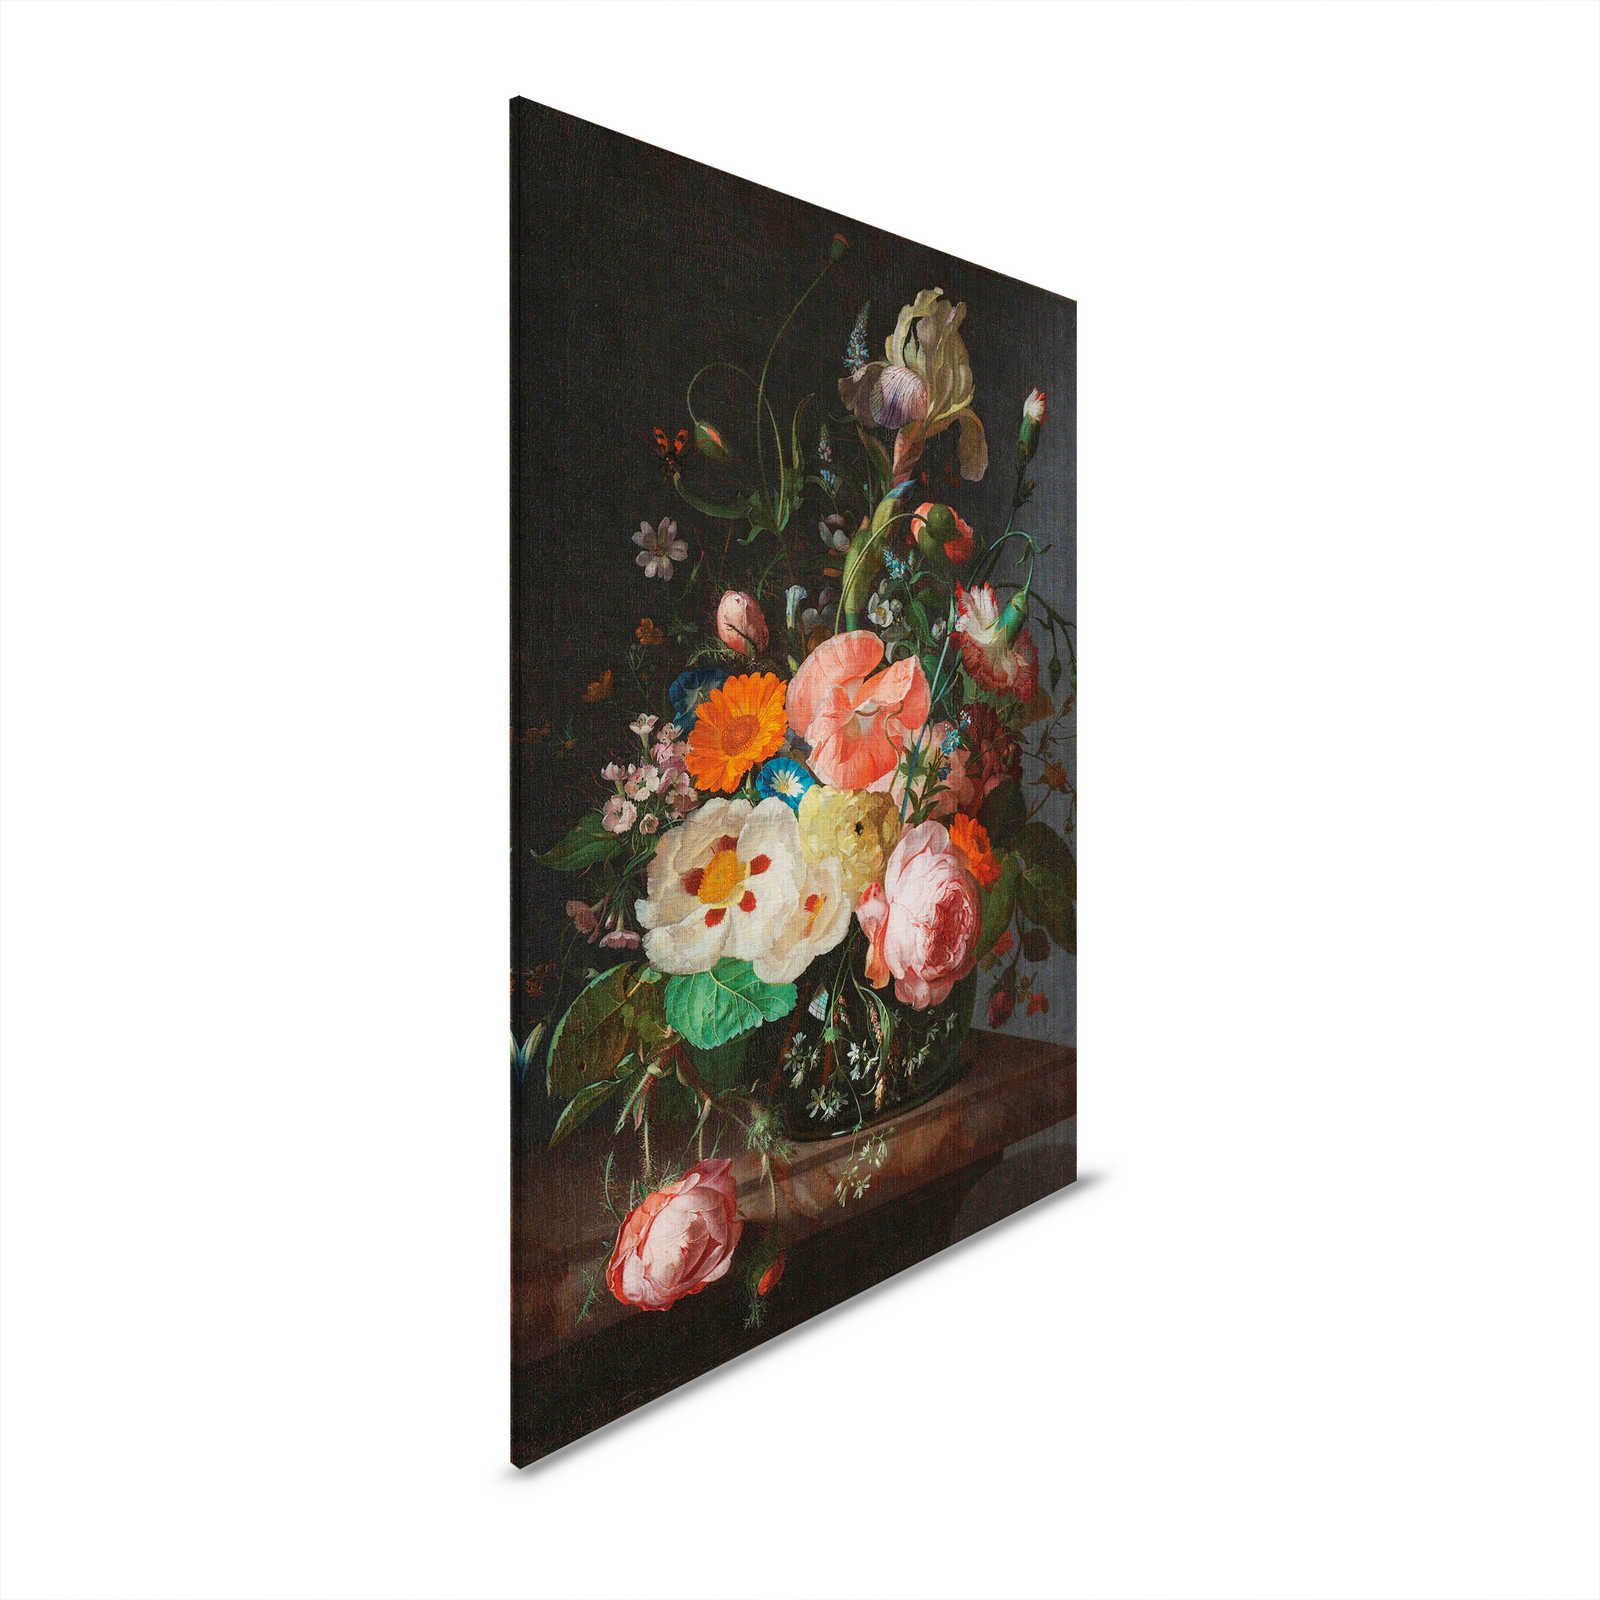         Artists Studio 3 - Flowers Canvas Painting Still Life - 0,60 m x 0,90 m
    